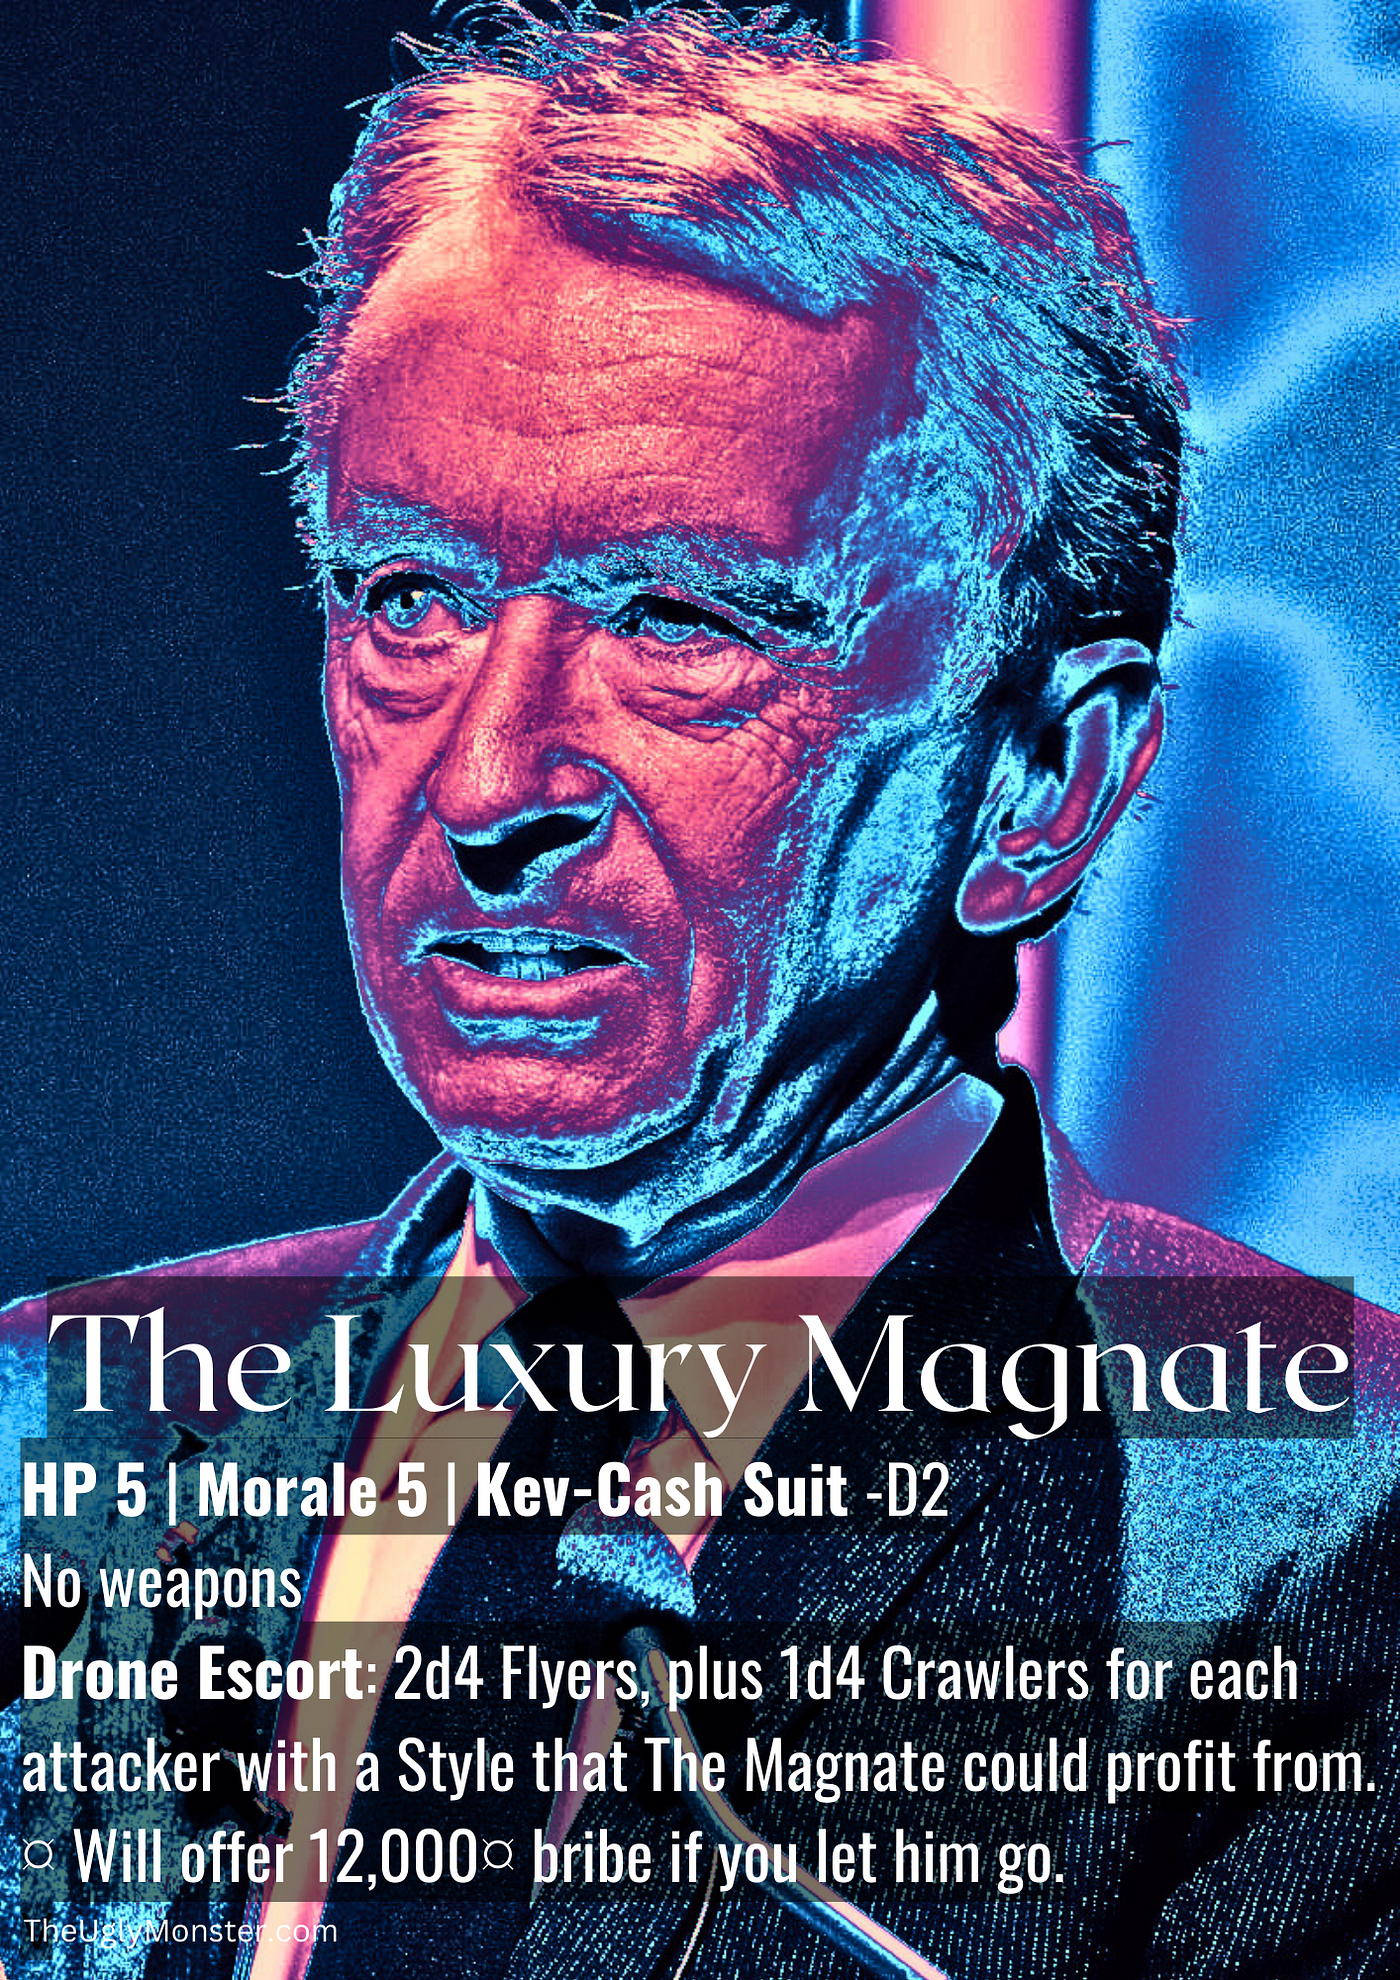 The great predator of luxury: this is how Bernard Arnault built